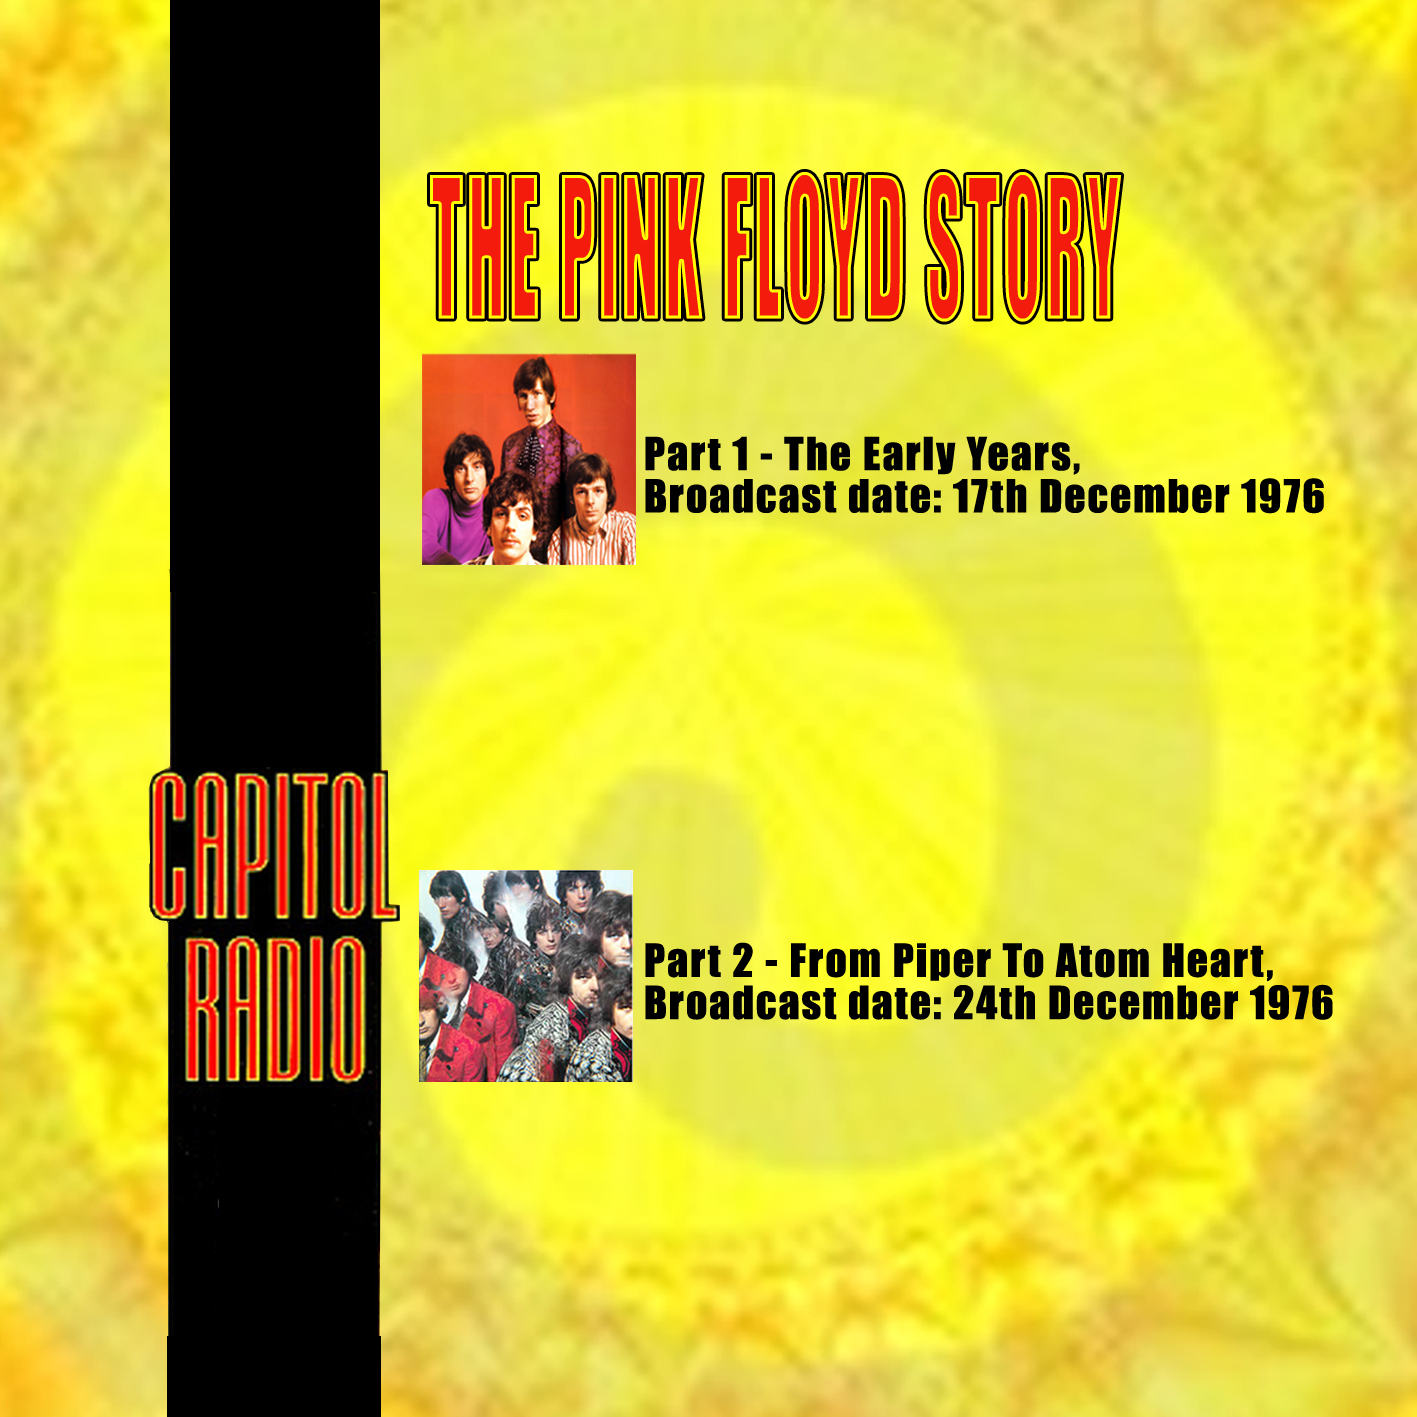 PinkFloyd1976-1977PinkFloydStoryCapitalRadioLondonUK_pt1 (1).jpg